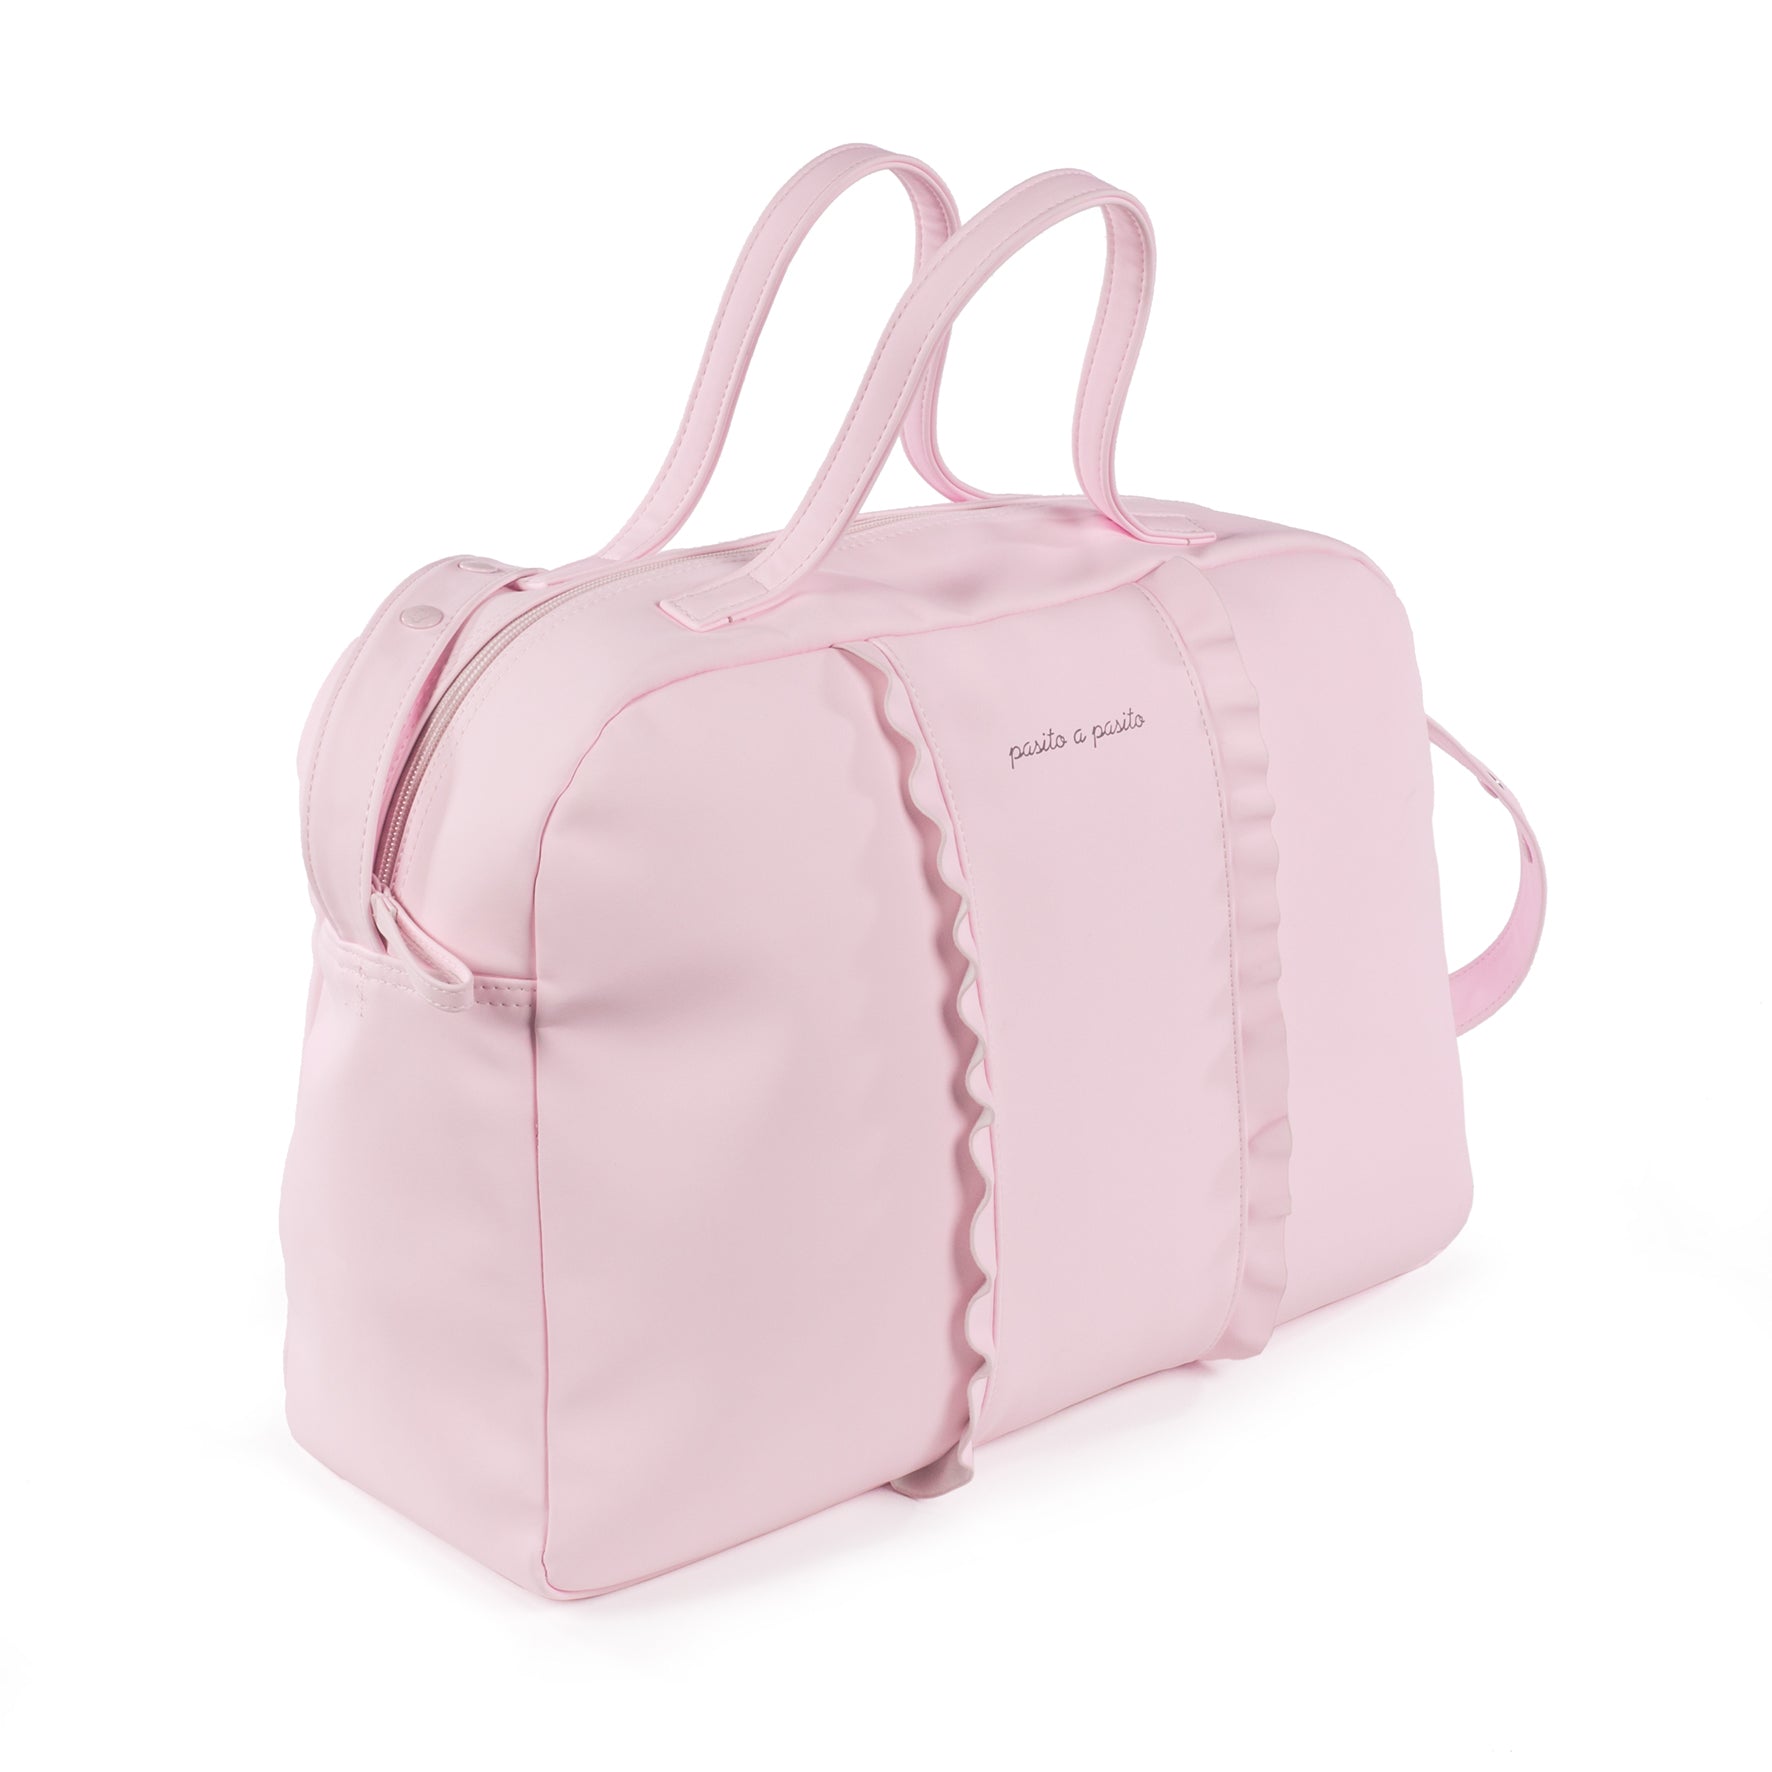 Pasito a Pasito Nido Flounce Pink Diaper Changing Bag